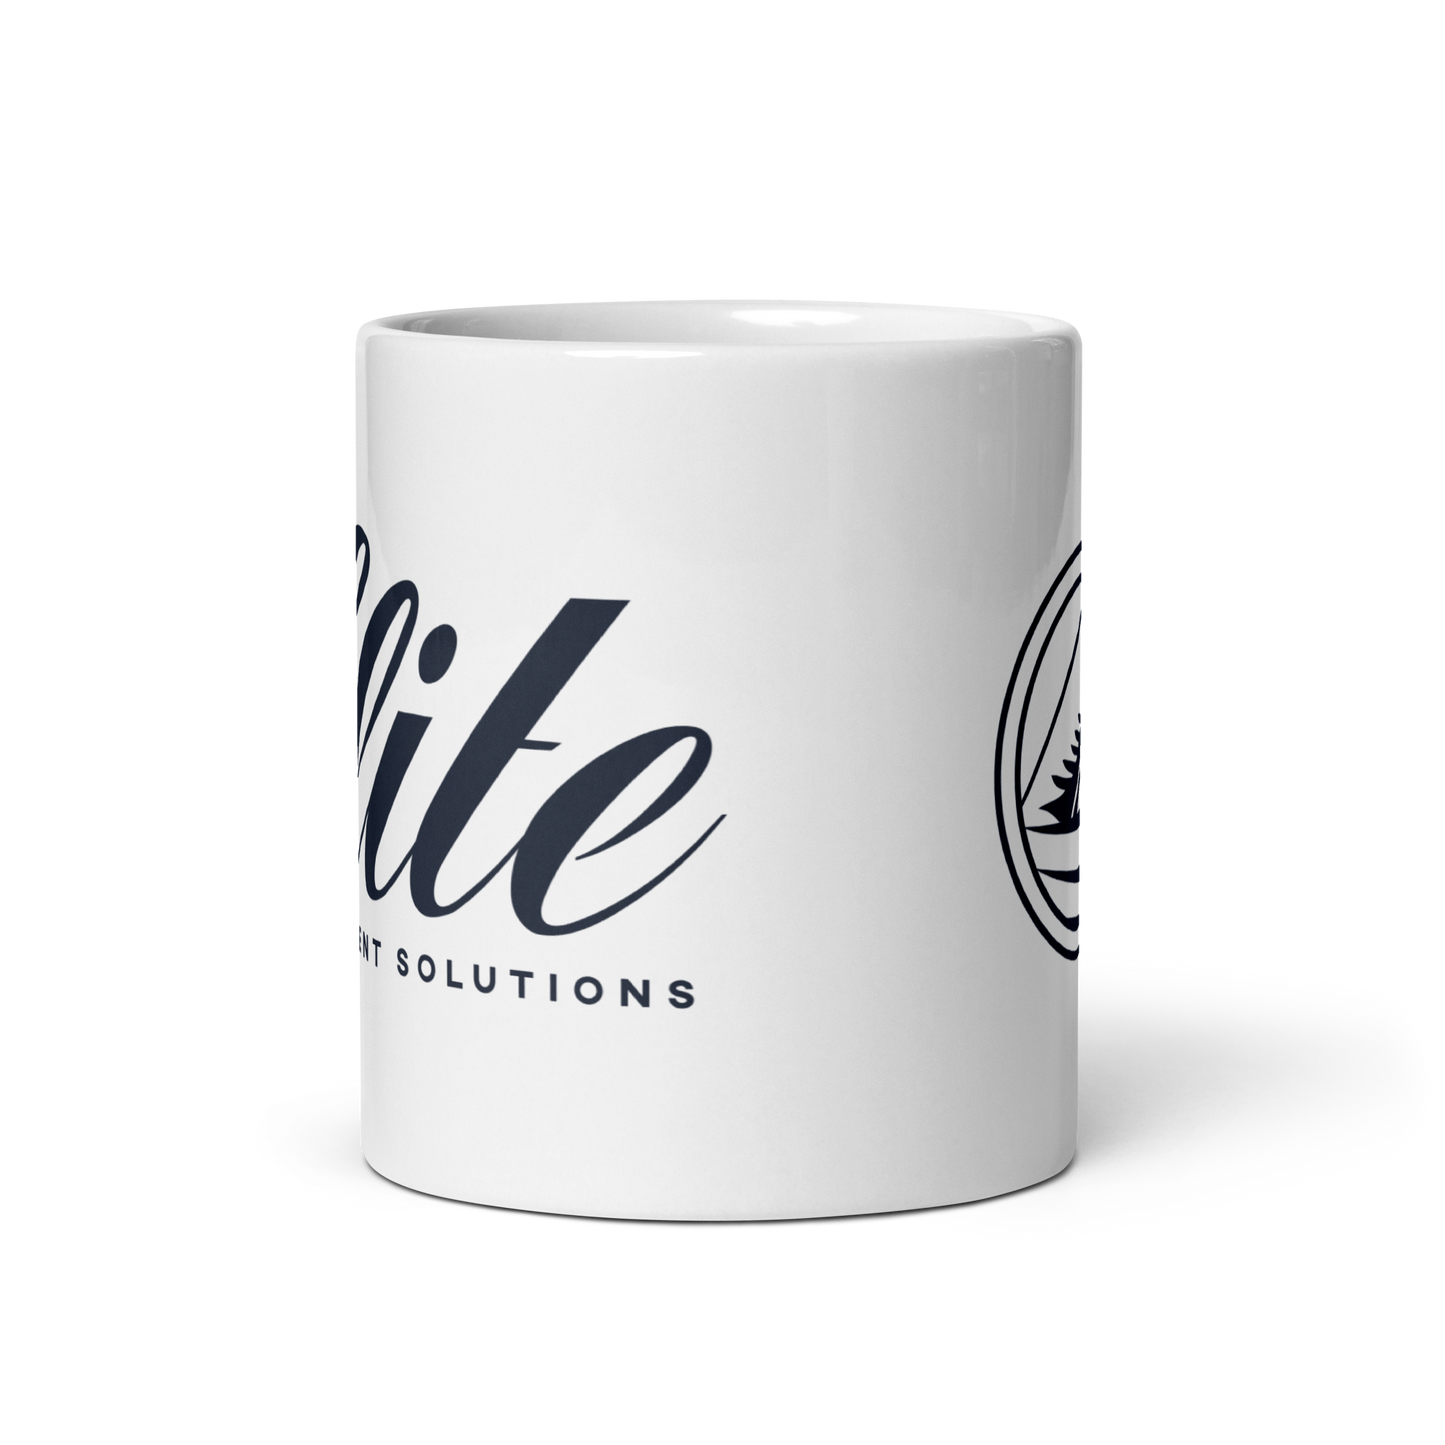 Elite Content Solutions White Glossy Mug